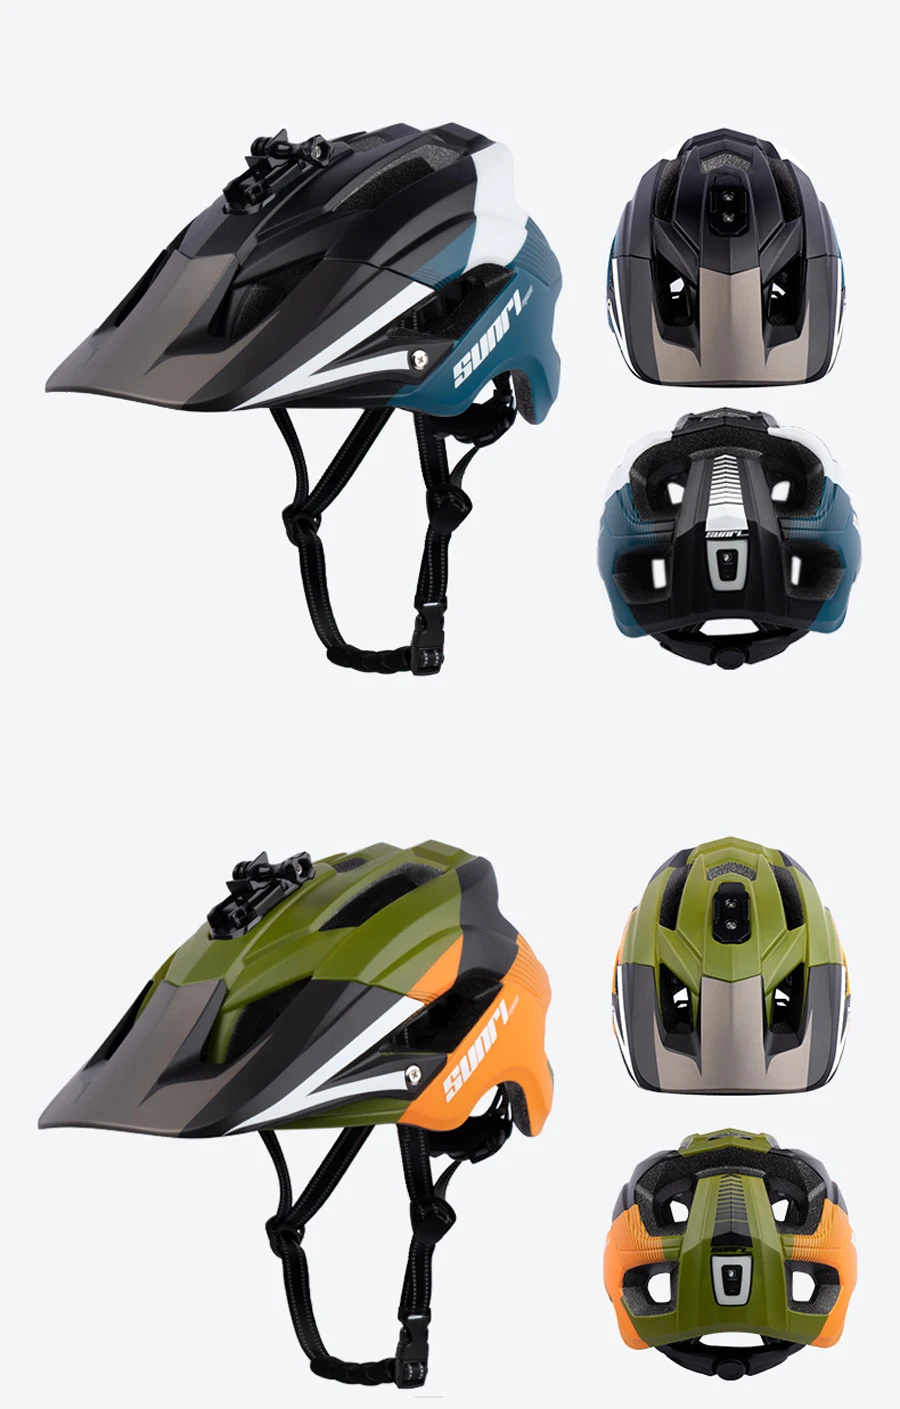 NEWBOLER MTB Road Bike Downhill Helmet LED Lights gopro Camera Holder Cycling Helmet Outdoor Sport Riding Bicycle Helmet For Man